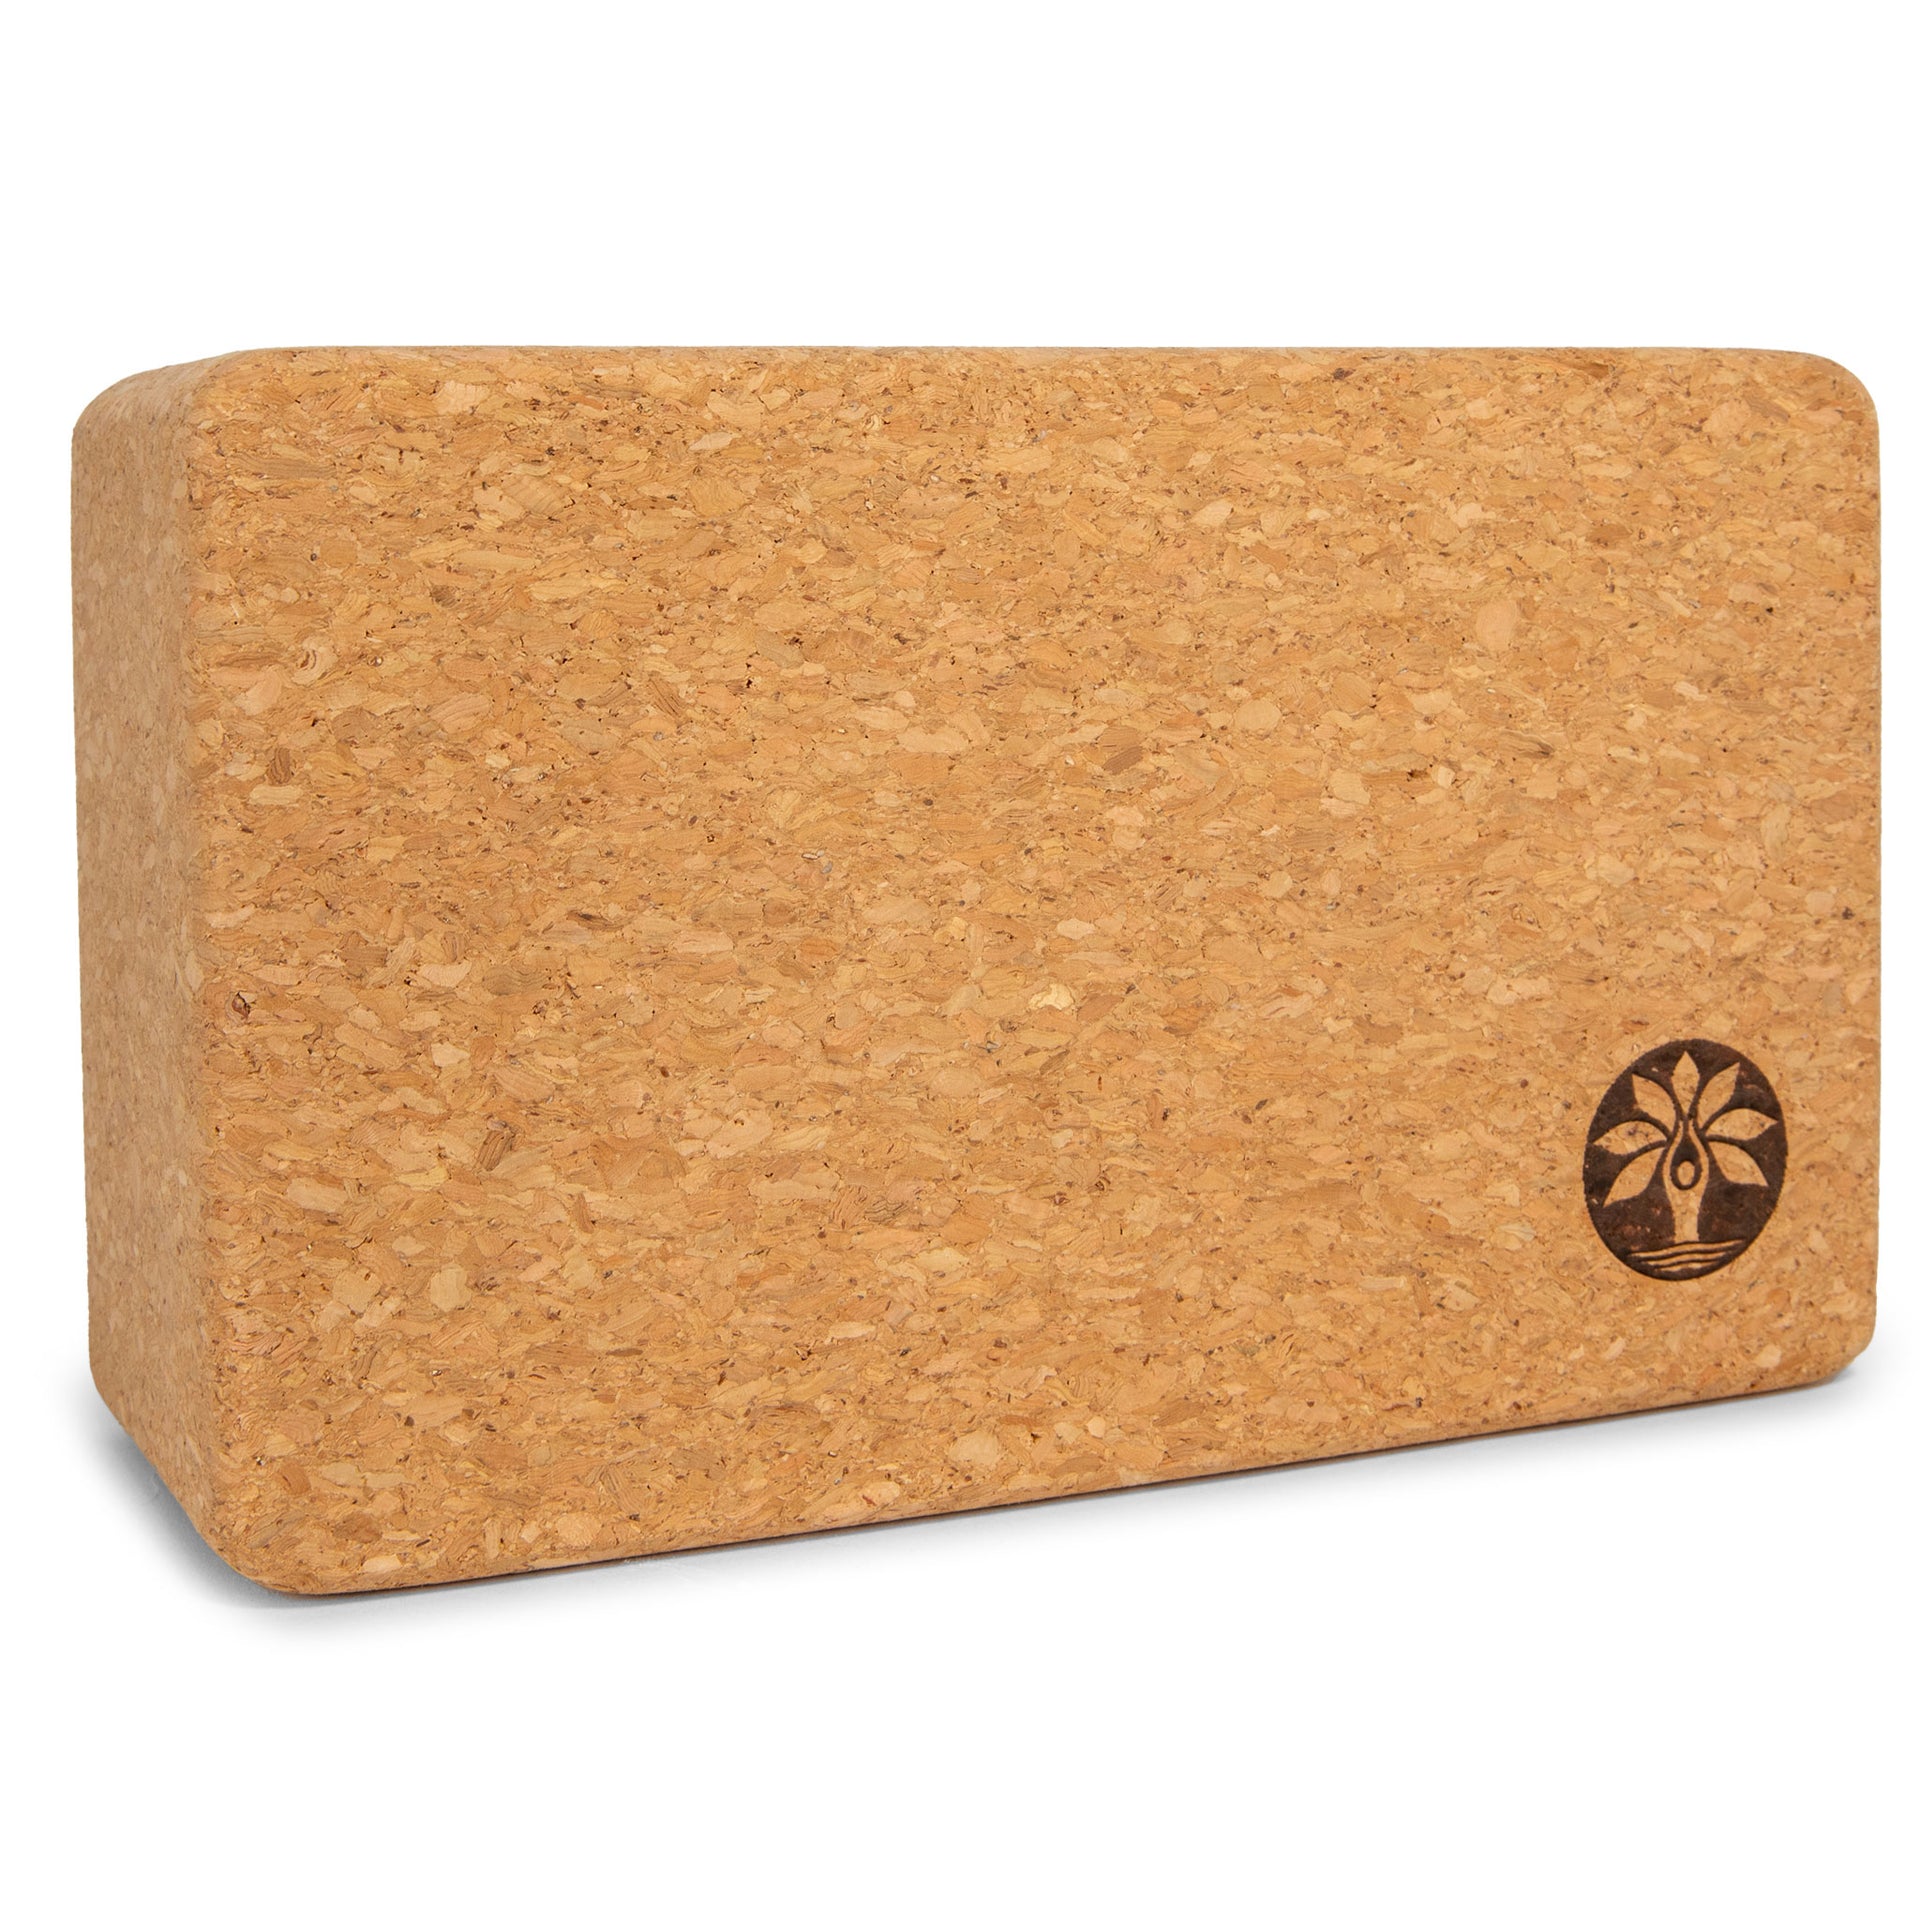 Cork Expandable Floor Pad - The Best Natural Puzzle Mats